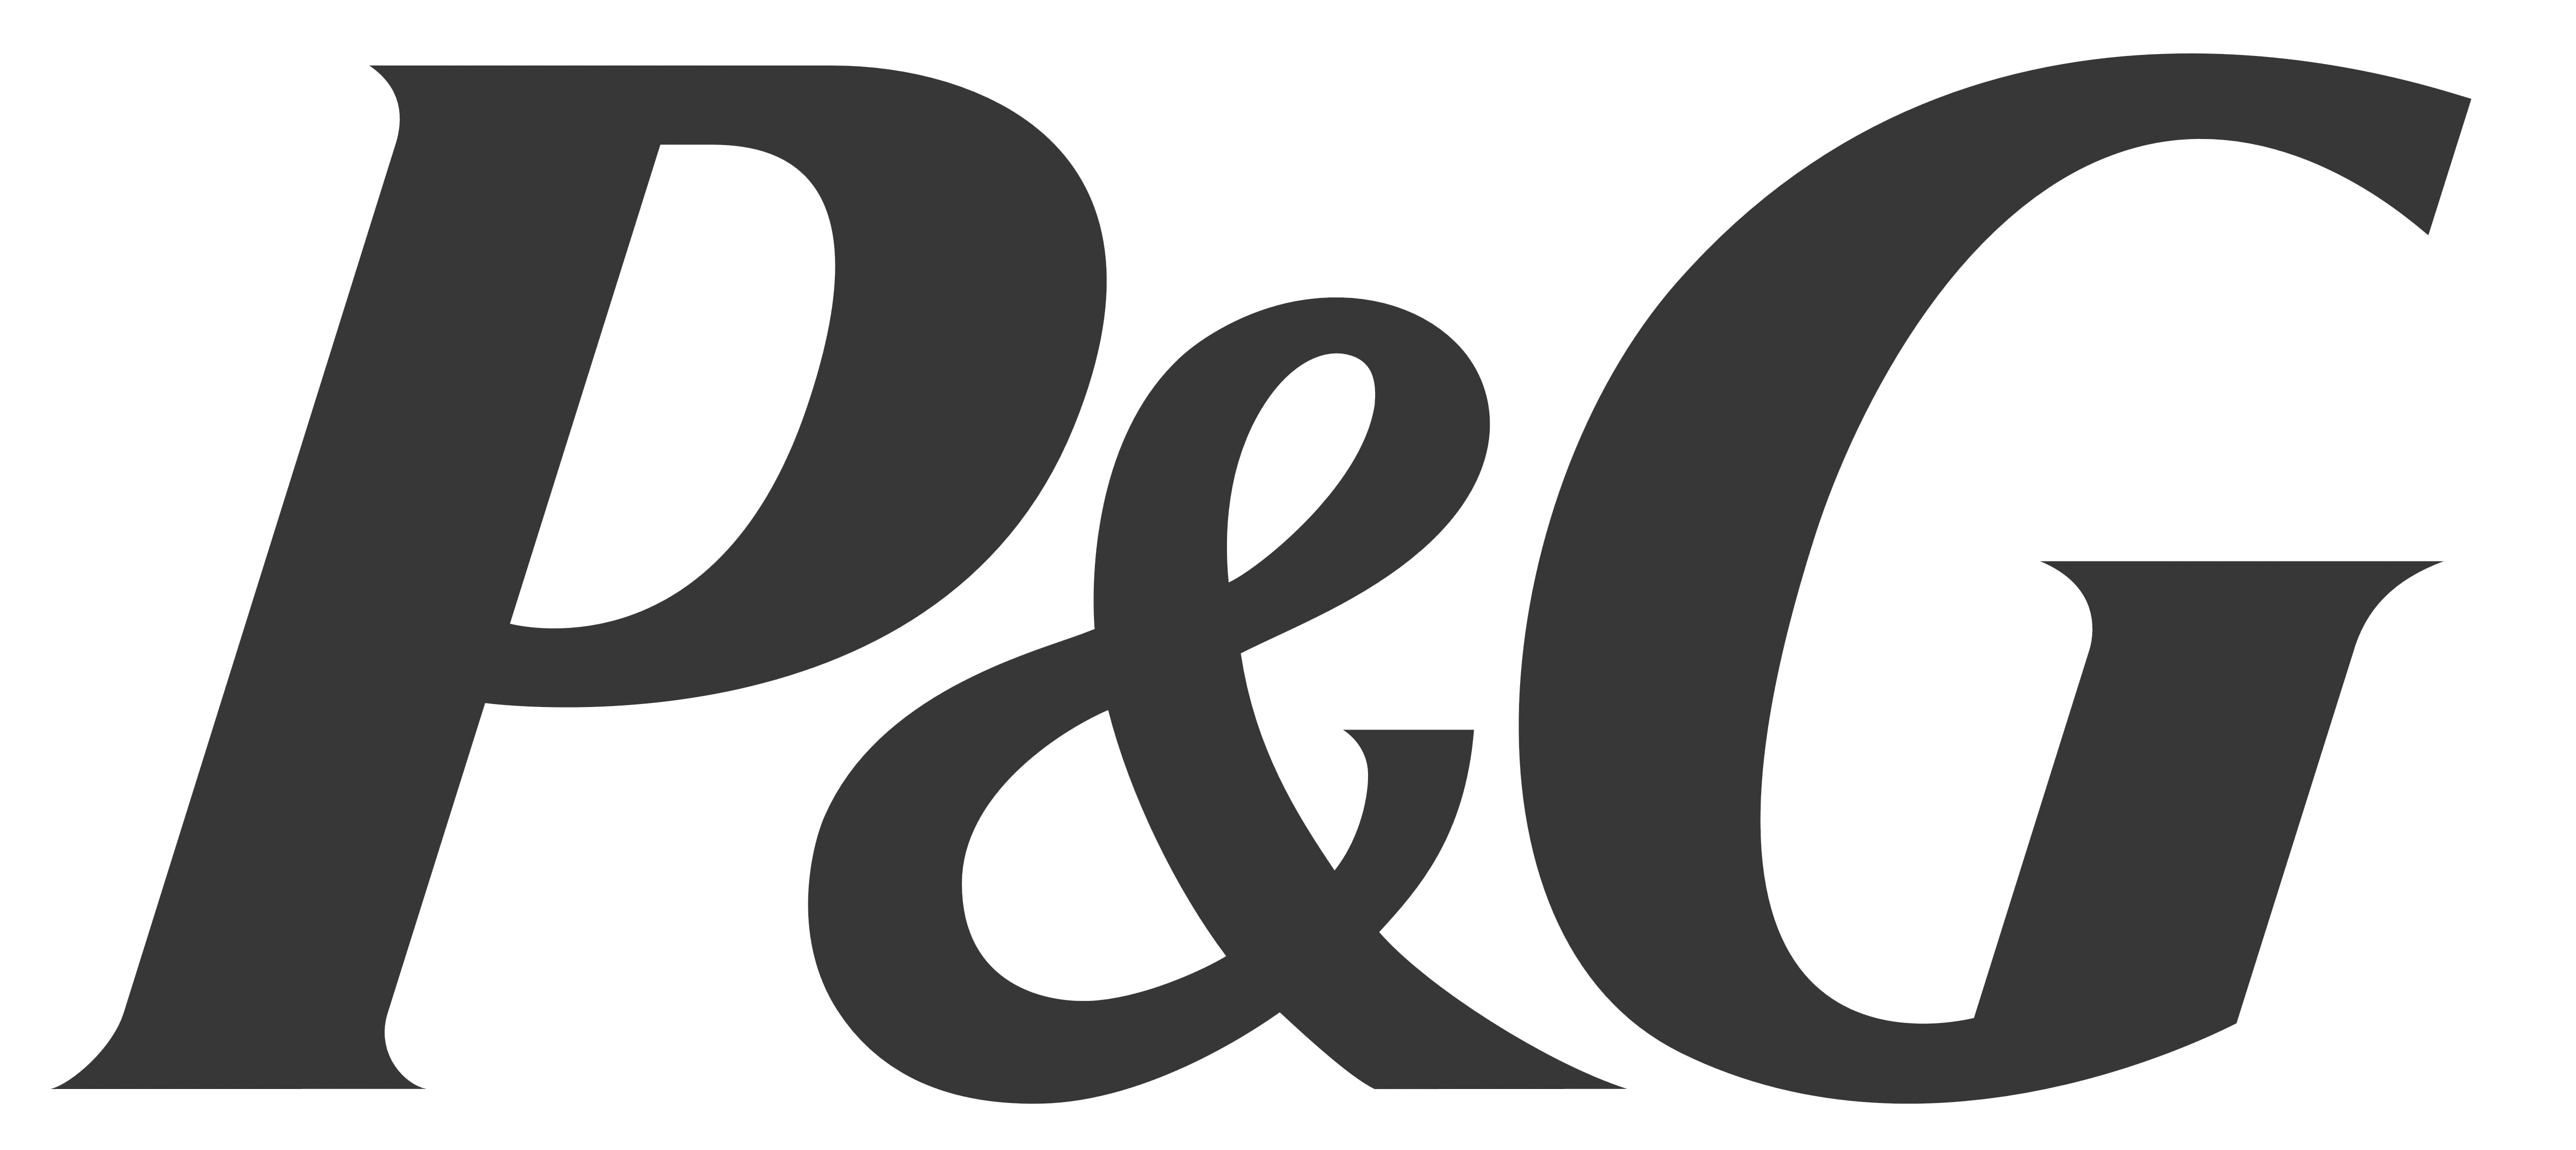 P&G procter and gamble logo